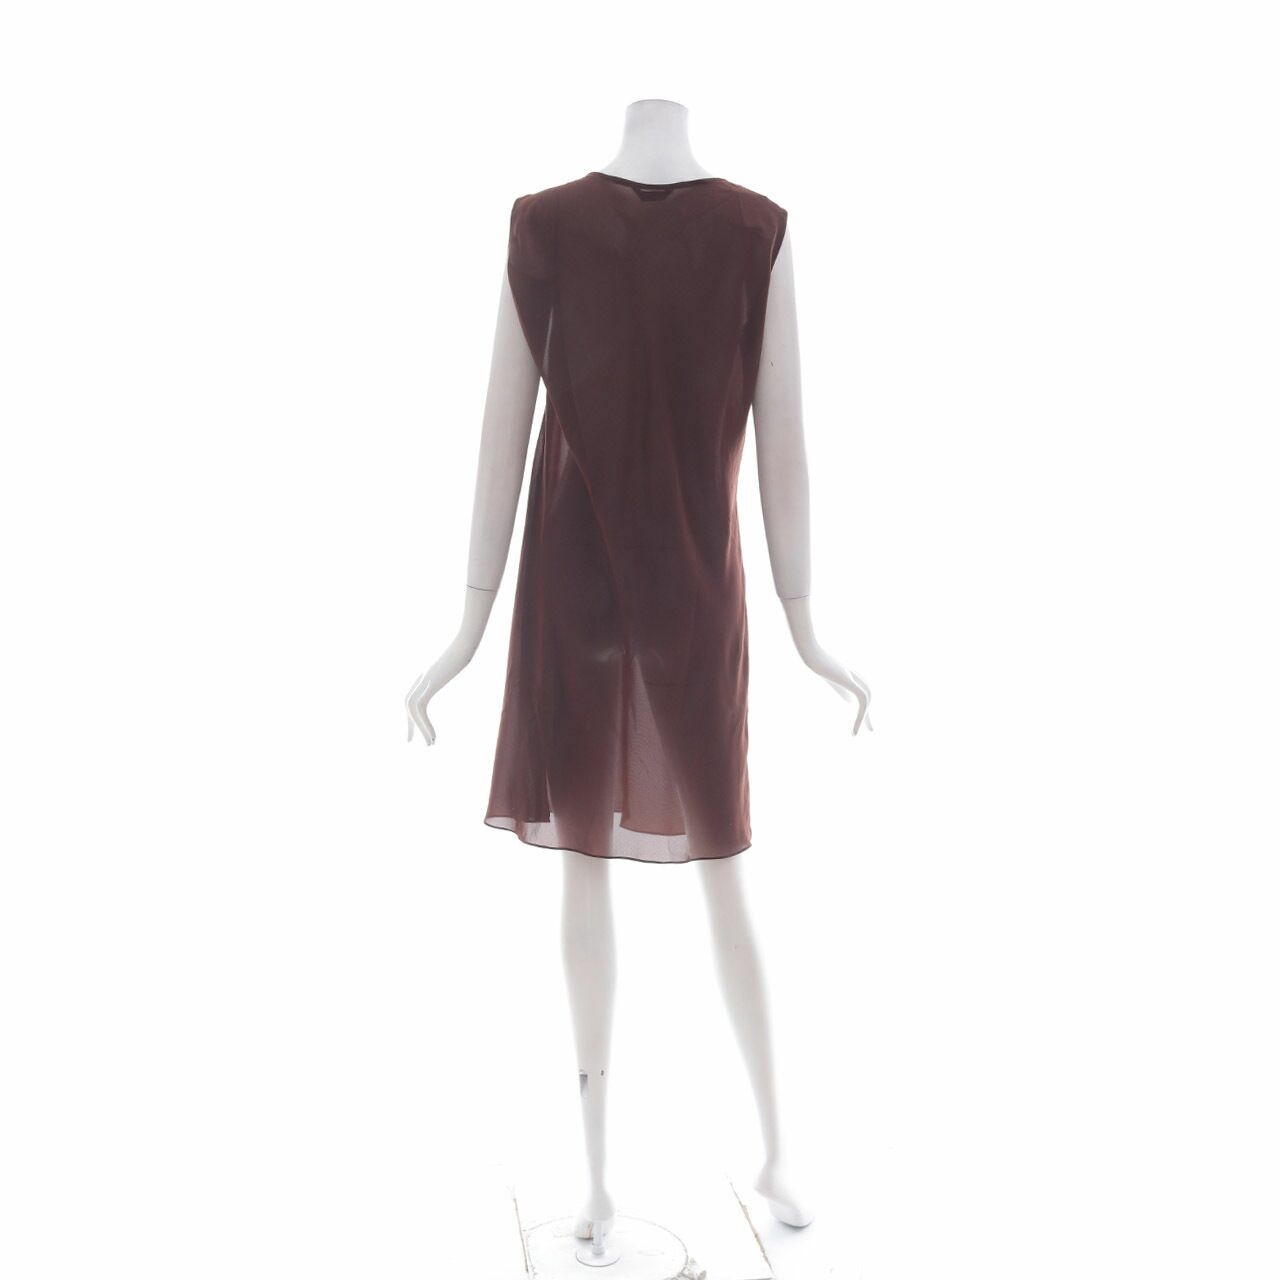 Itang Yunasz Brown Sheer Mini Dress